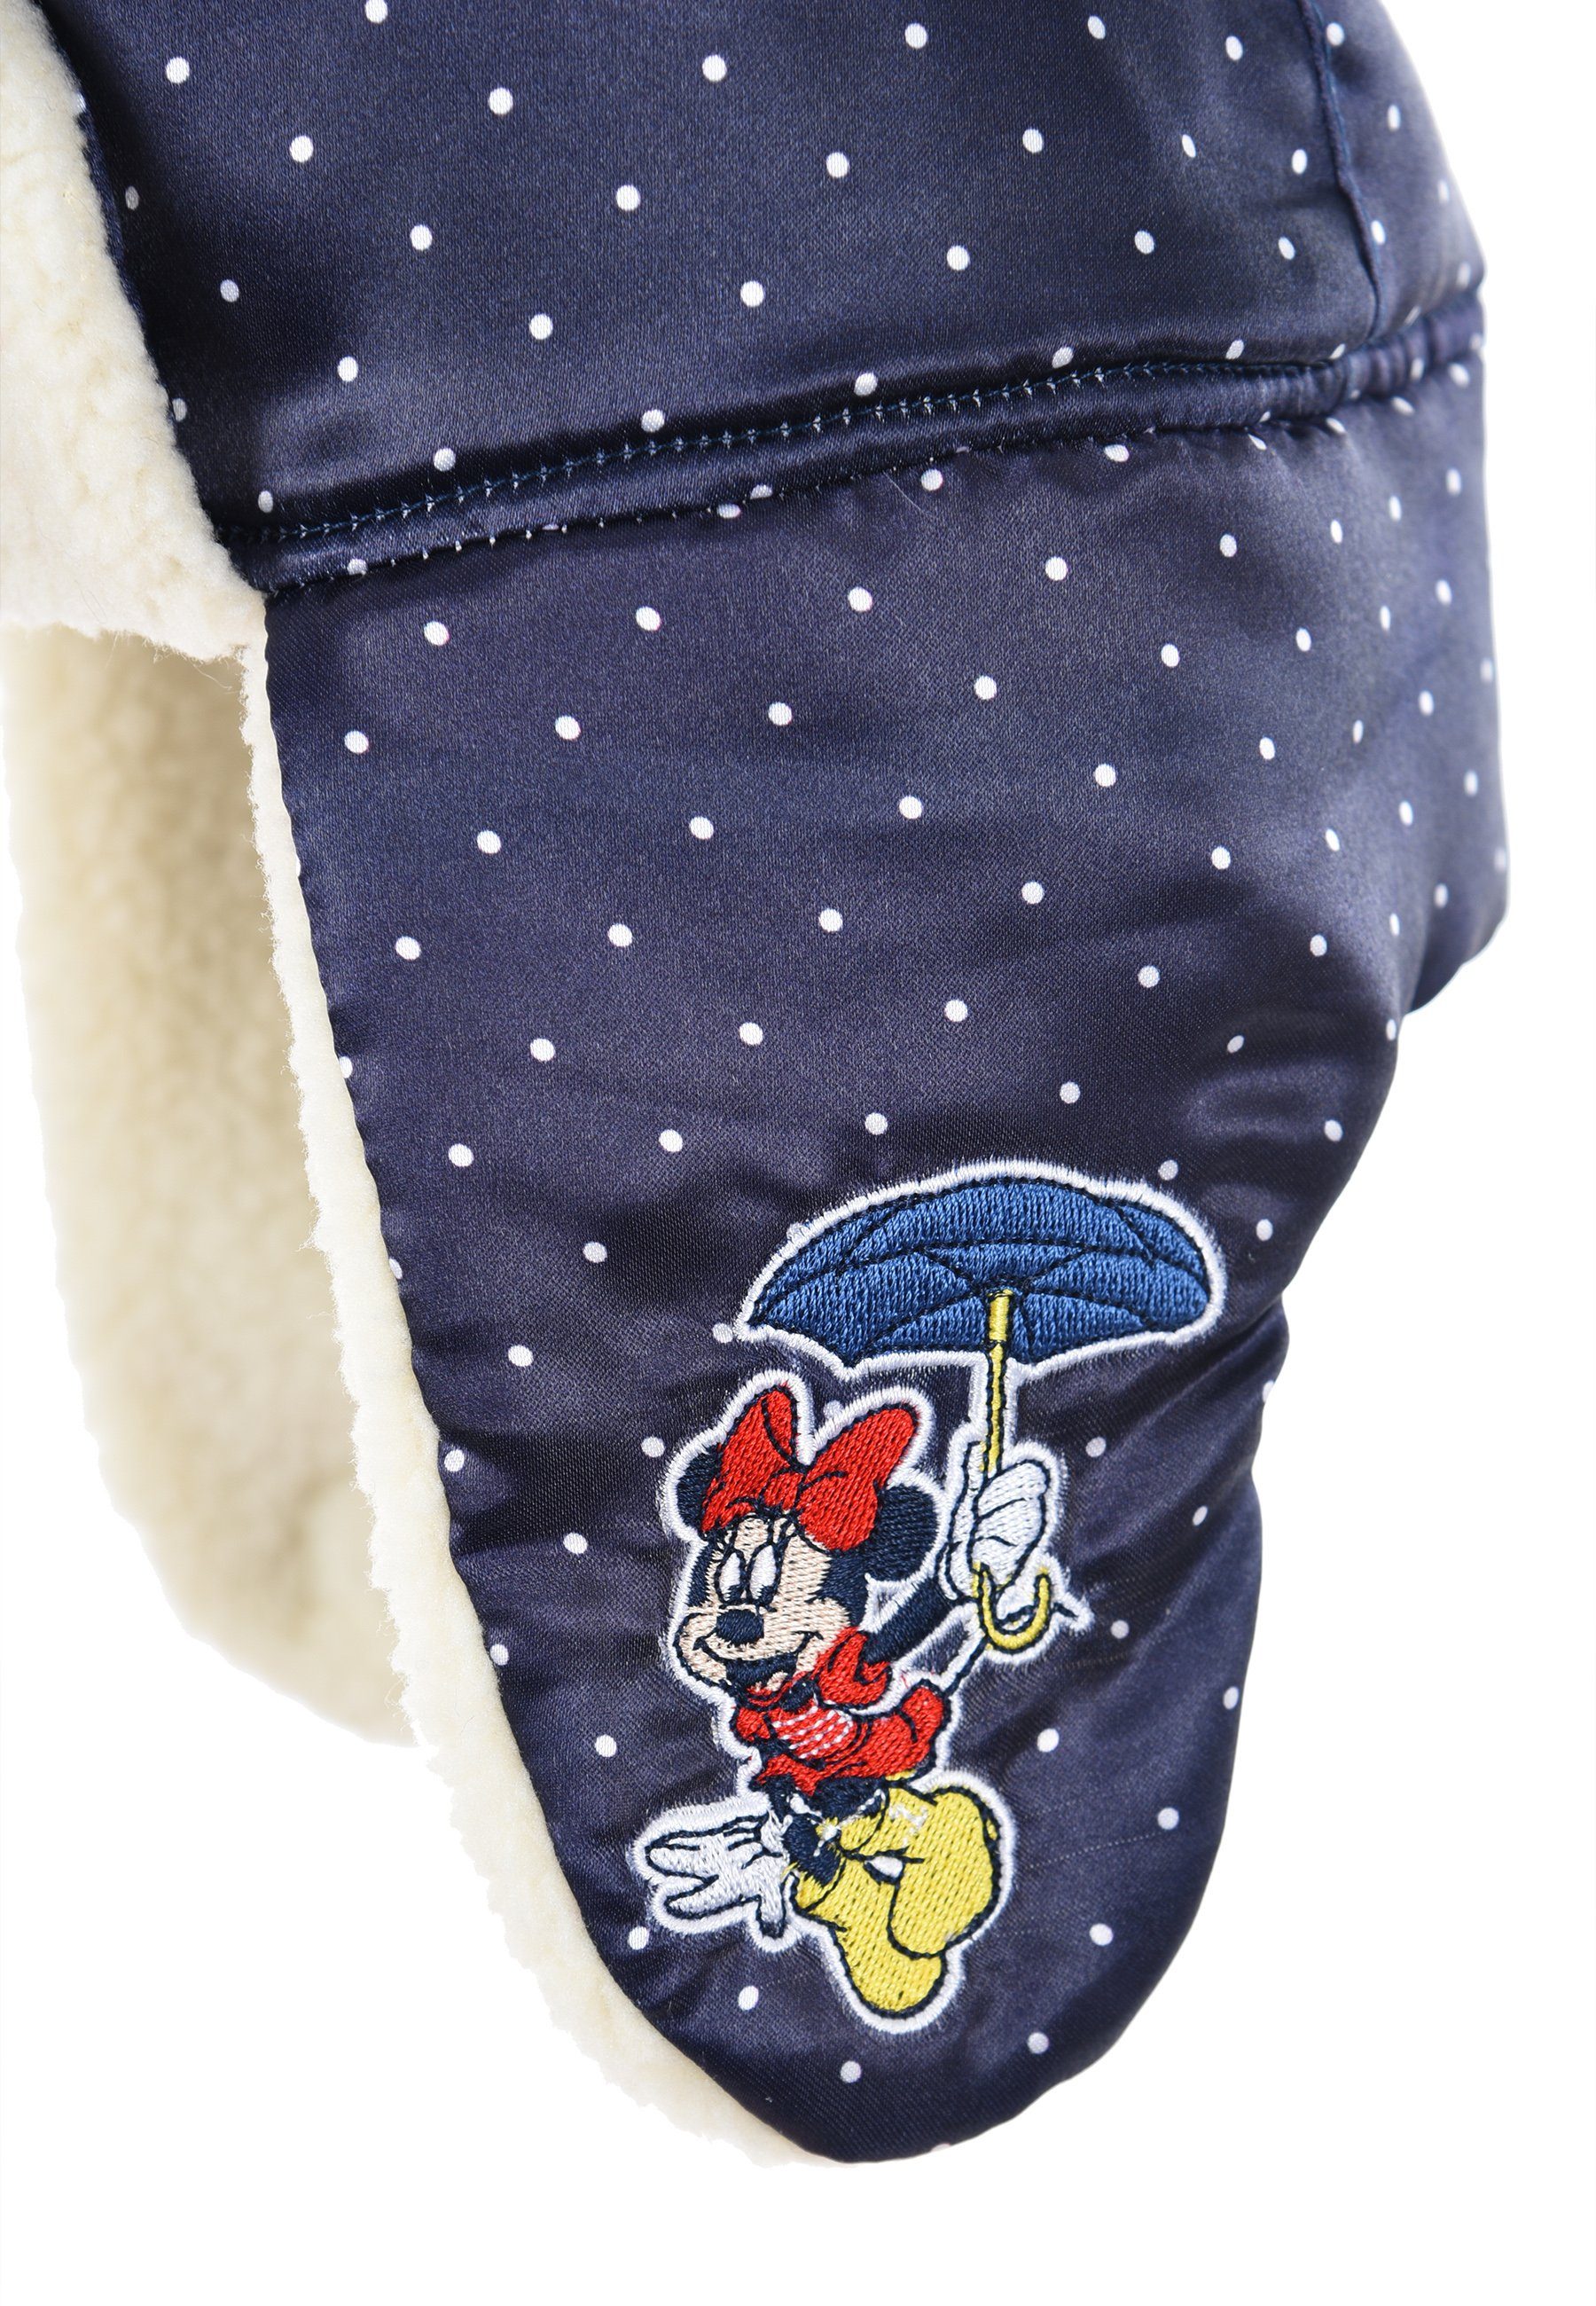 Disney Minnie Mouse Fleecemütze Winter-Mütze Baby Mädchen Dunkel-Blau